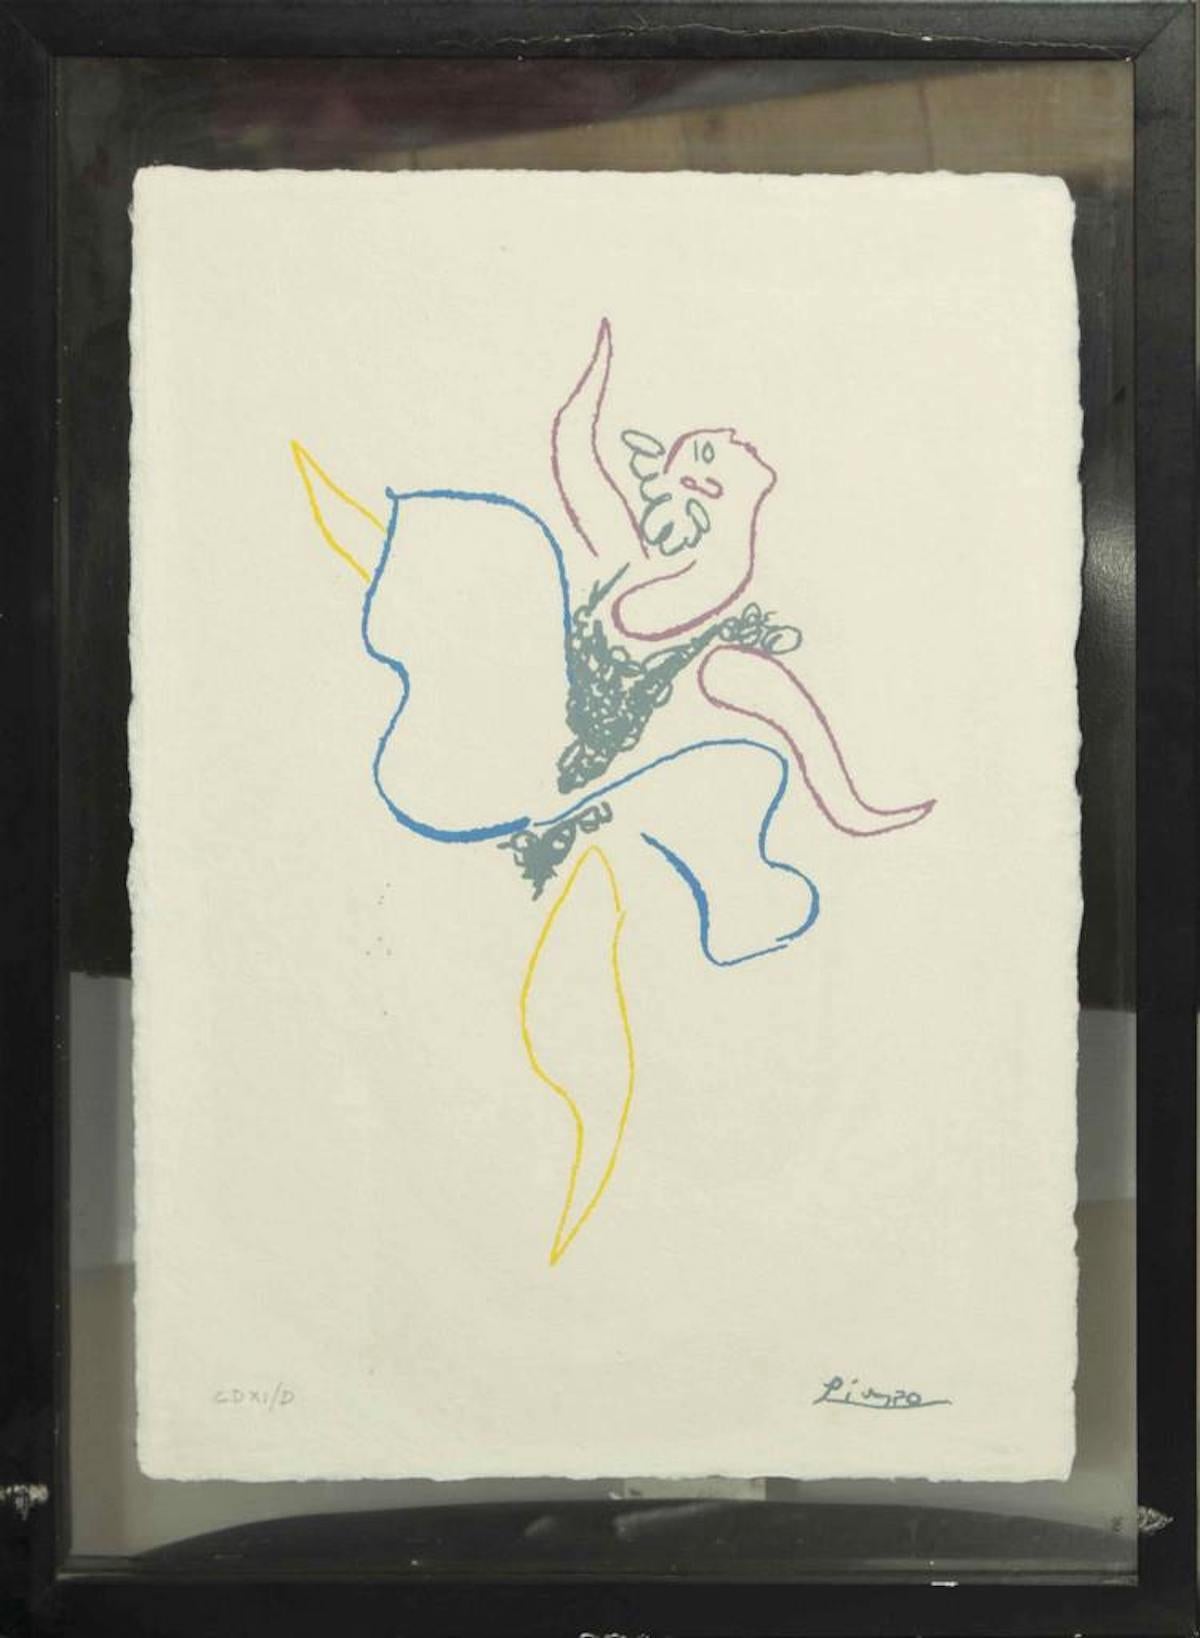 La Bailarina - Original Lithograph After Pablo Picasso - 1954 - Print by (after) Pablo Picasso